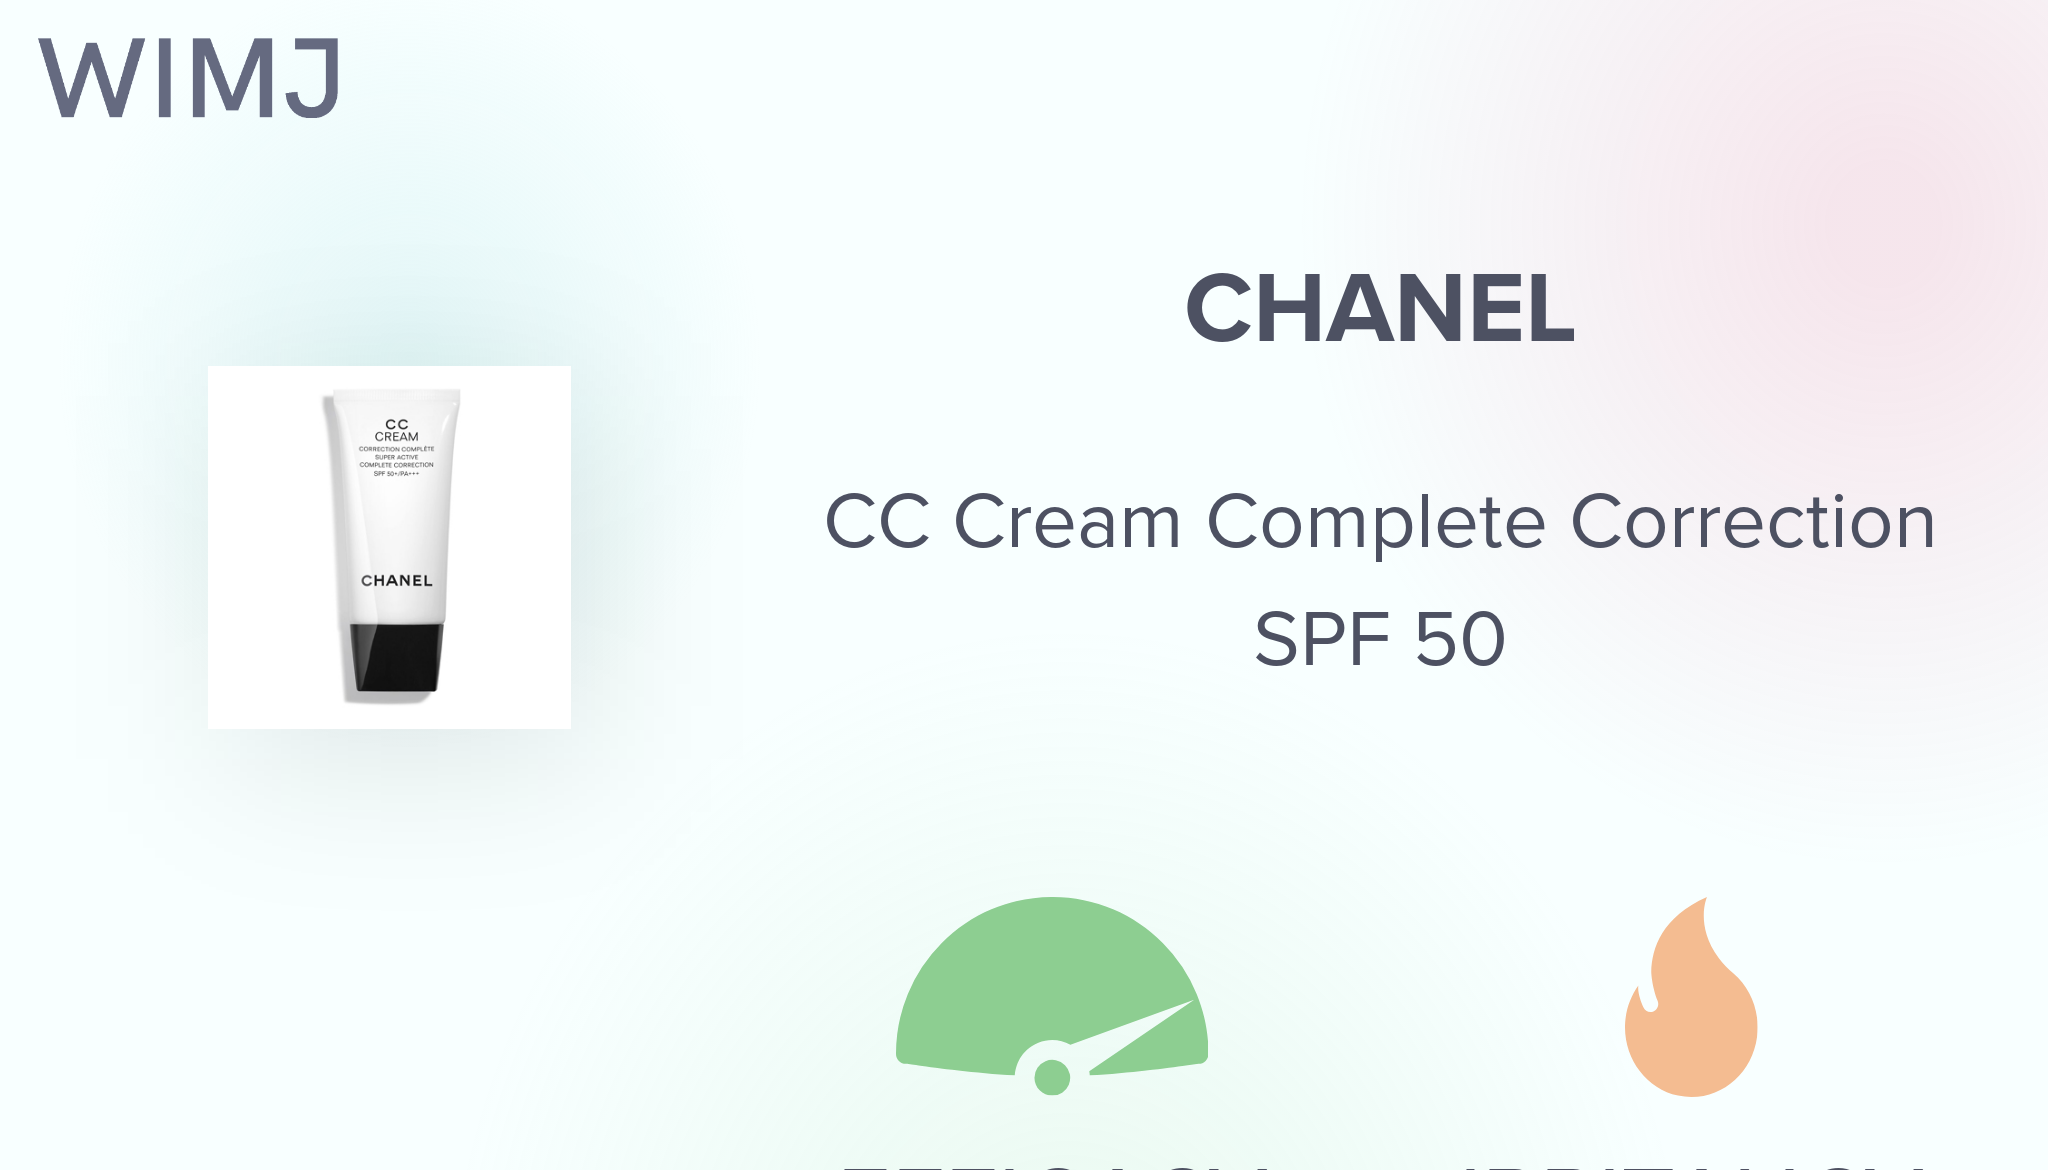 Review: CHANEL - CC Cream Complete Correction SPF 50 - WIMJ